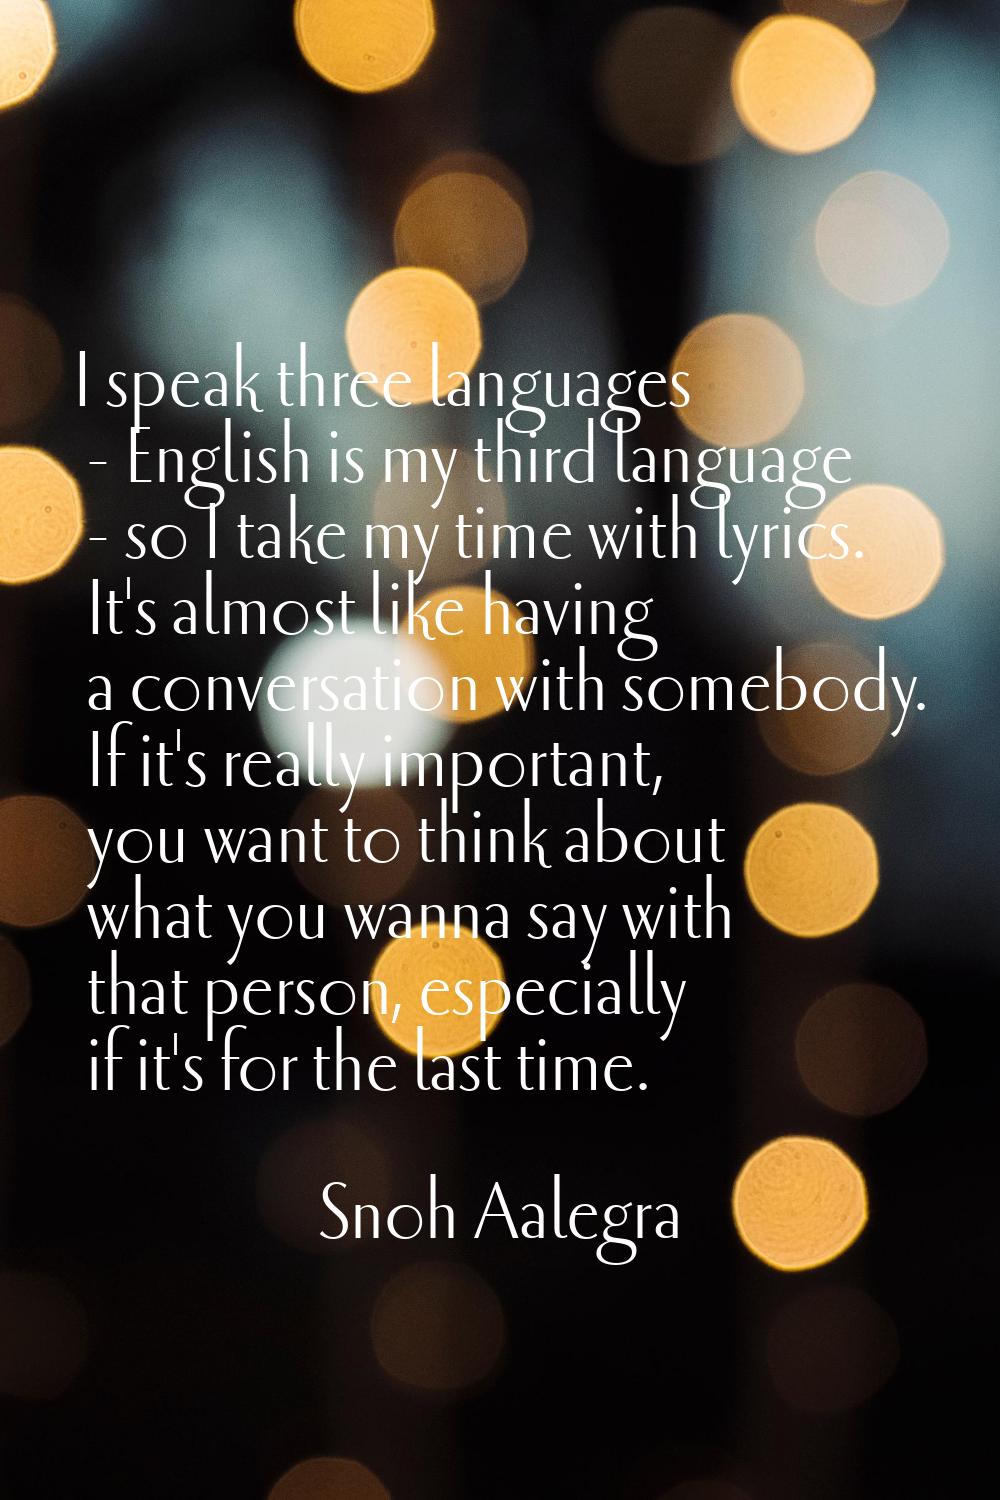 I speak three languages - English is my third language - so I take my time with lyrics. It's almost